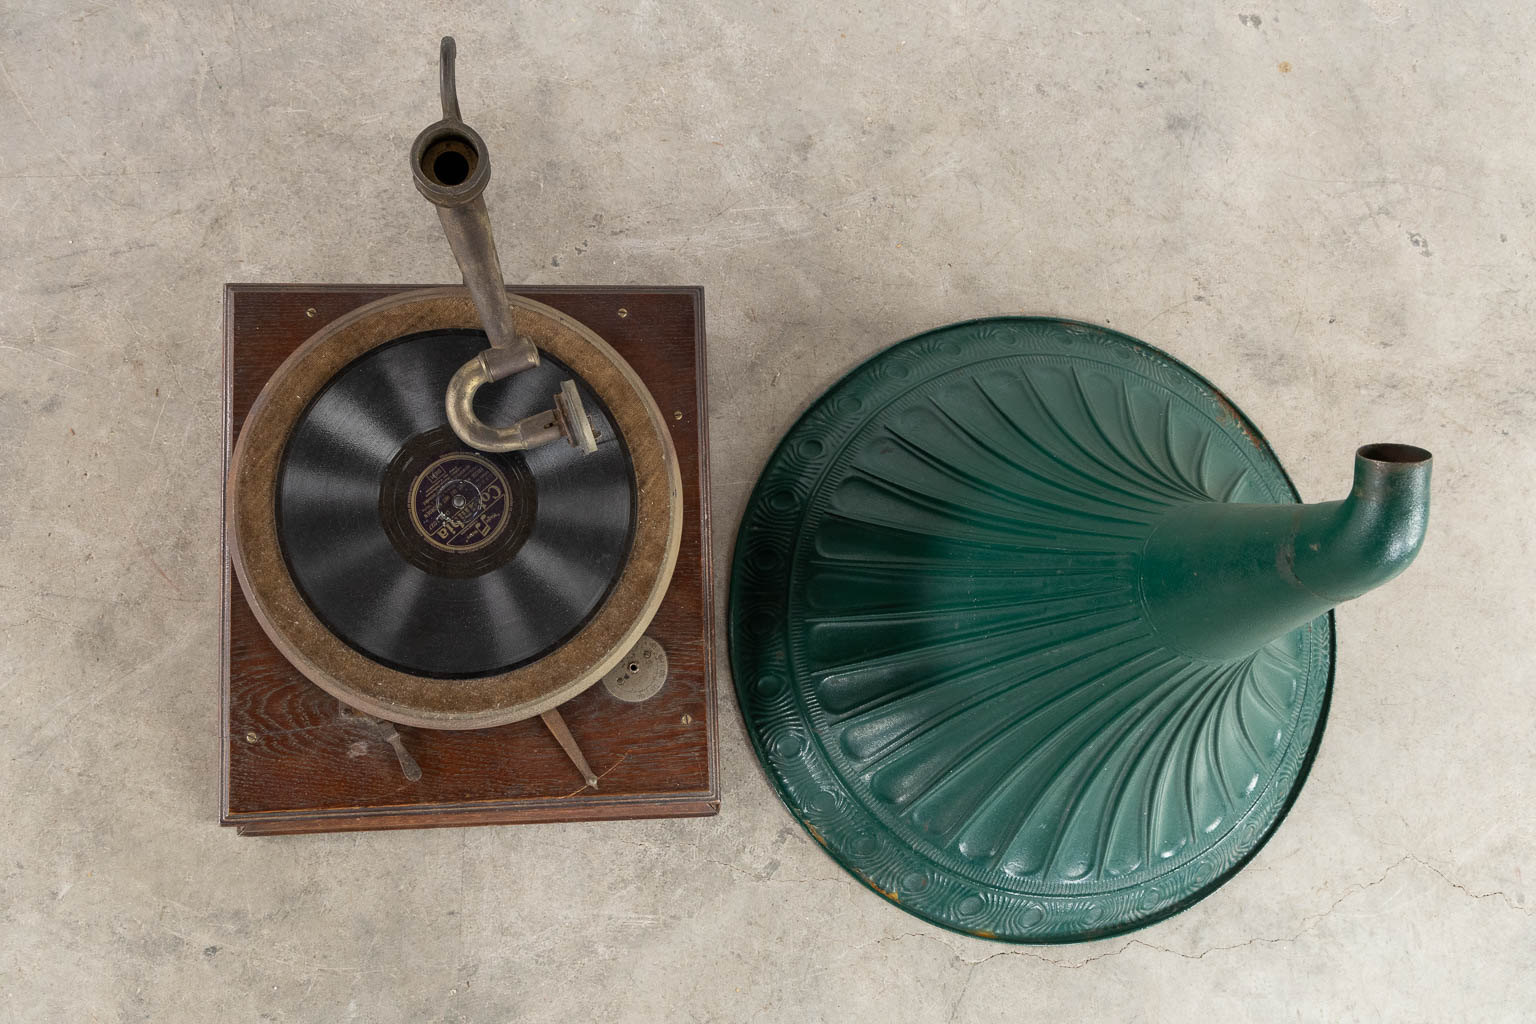 An antique and decorative Grammophone. (L:68 x W:56 x H:77 cm)